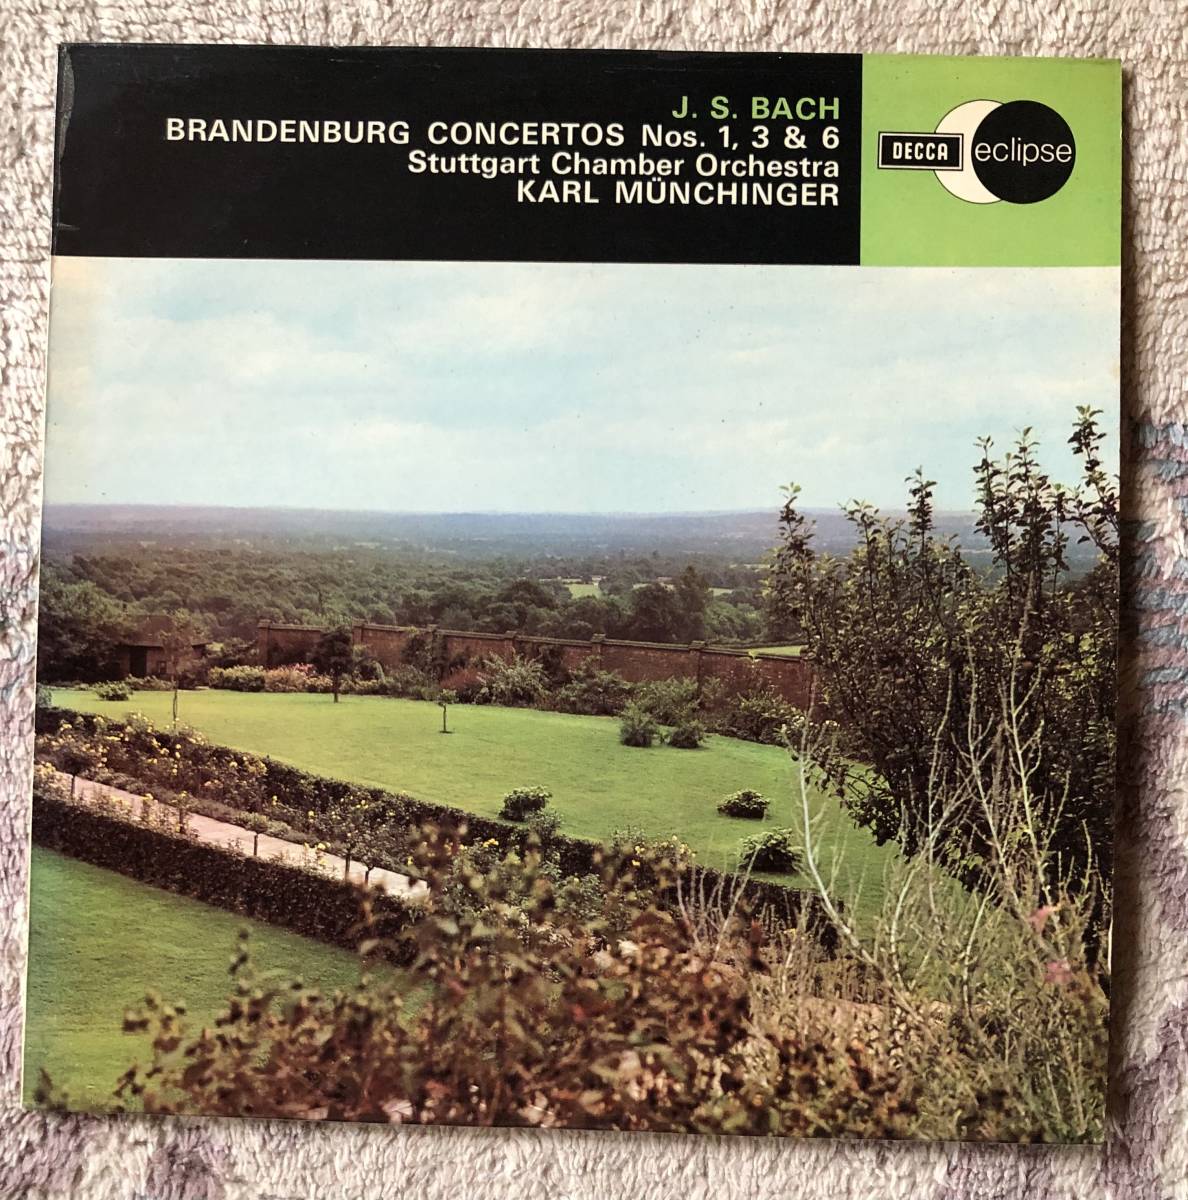 LP-Aug / 英 DECCA / Karl Munchinger・Stuttgart Chamber Orchestra/ J.S.BACH_Brandenburg Concertos Nos.1, 3 & 6_画像1